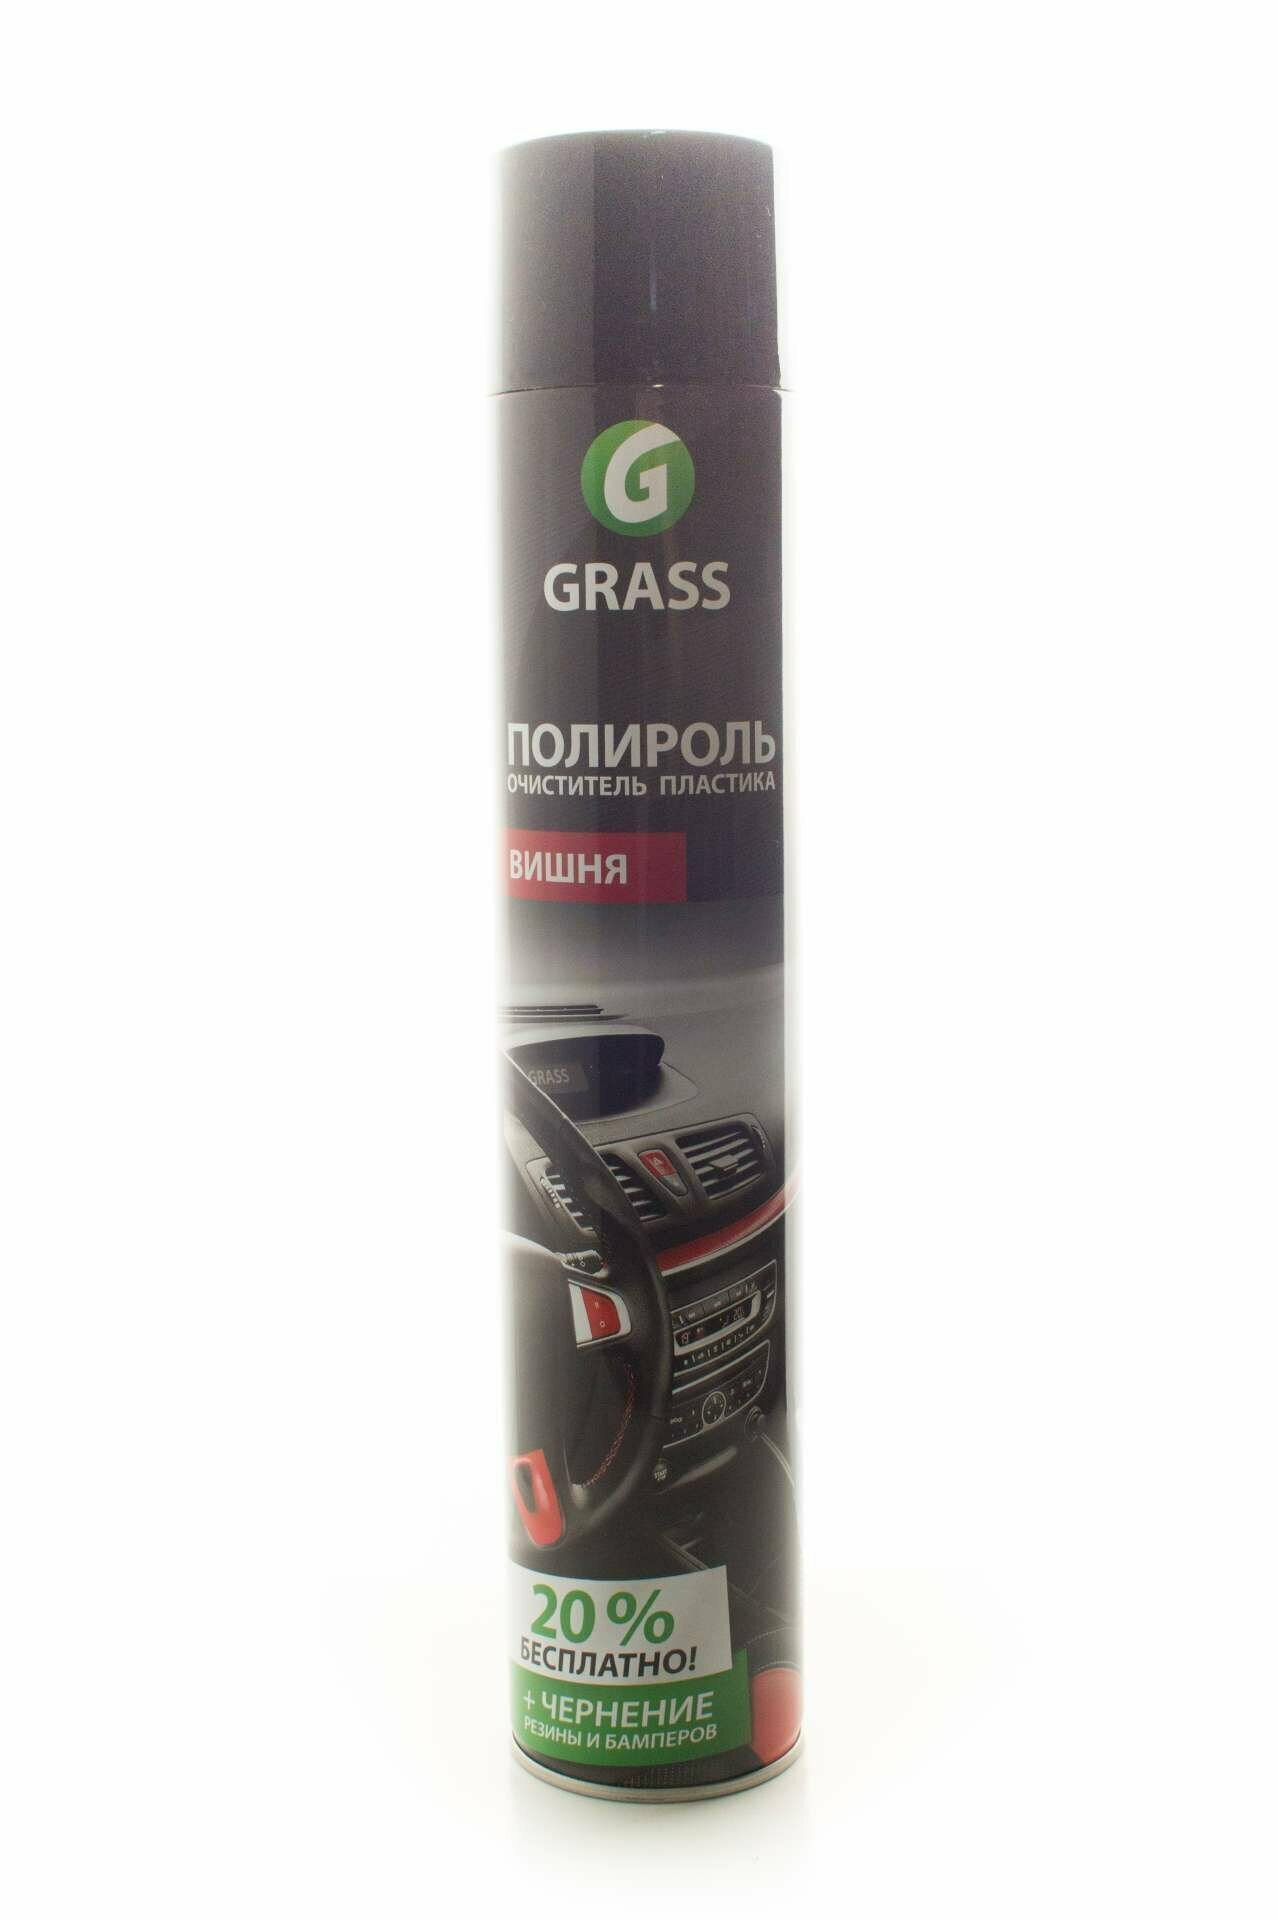 GRASS Полироль-очиститель пластика вишня 750мл